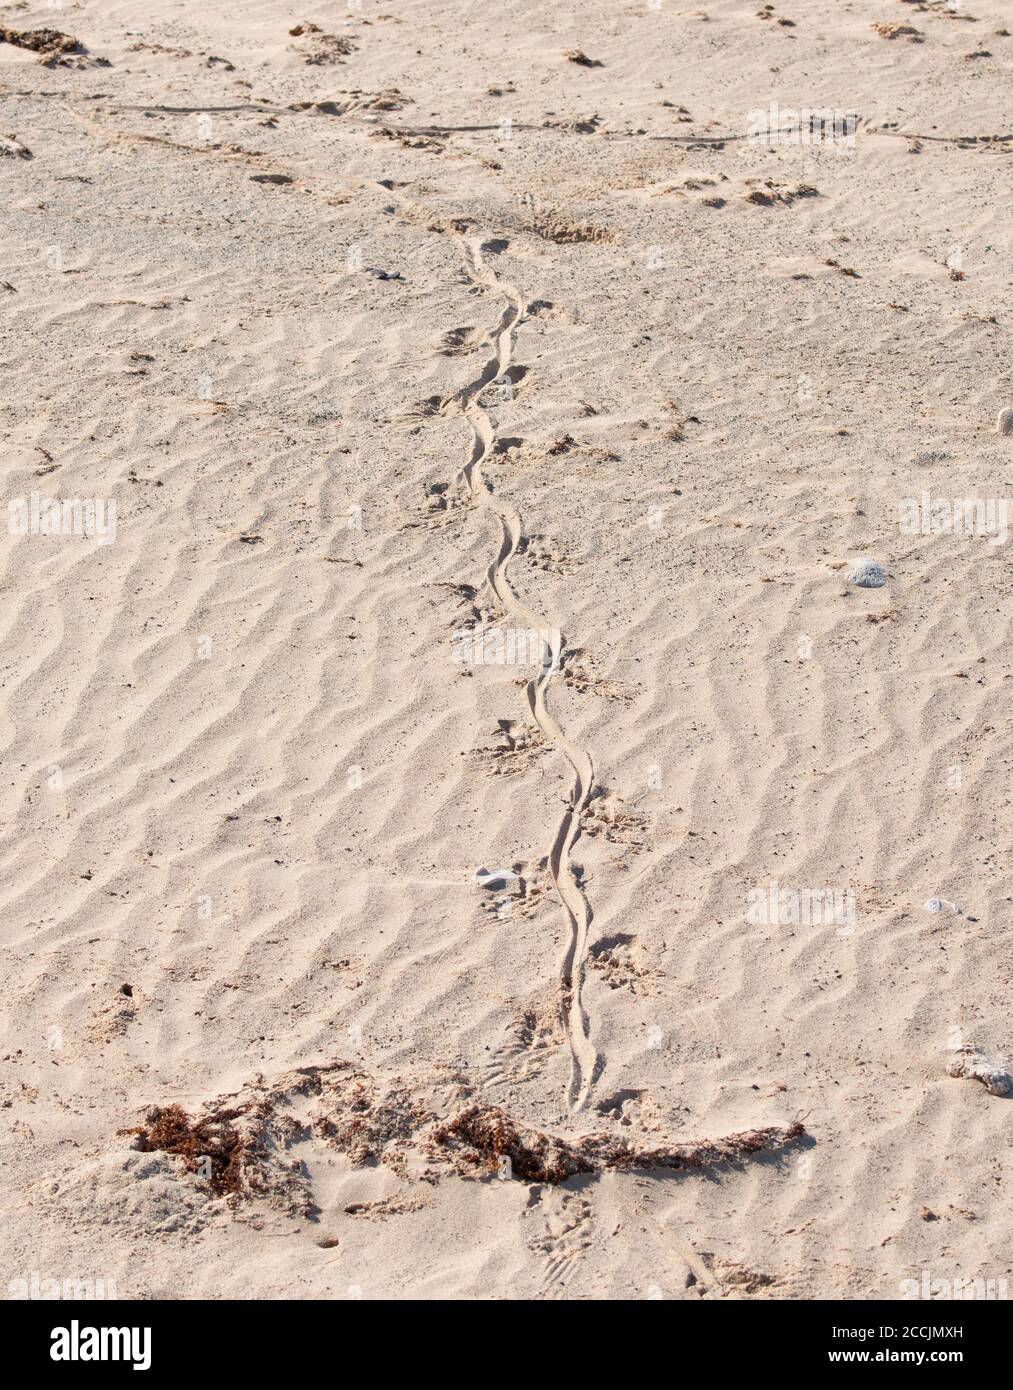 Tracks in the sand of a Sand Goanna or Sand Monitor in remote Cobourg Peninsula, Arnhem Land, Northern Territory, NT, Australia Stock Photo